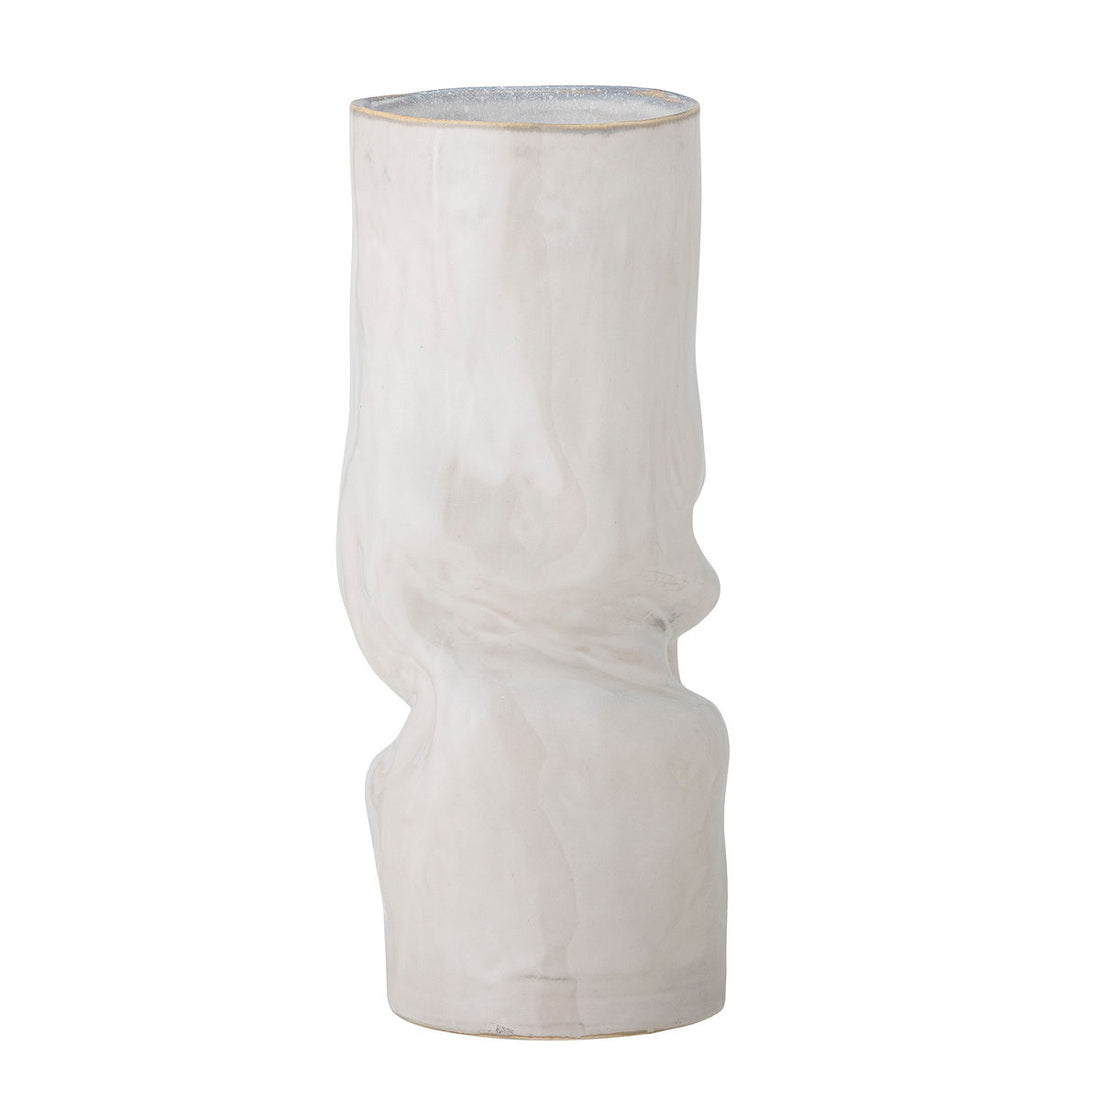 Bloomingville Araba Vase, White, Stoneware